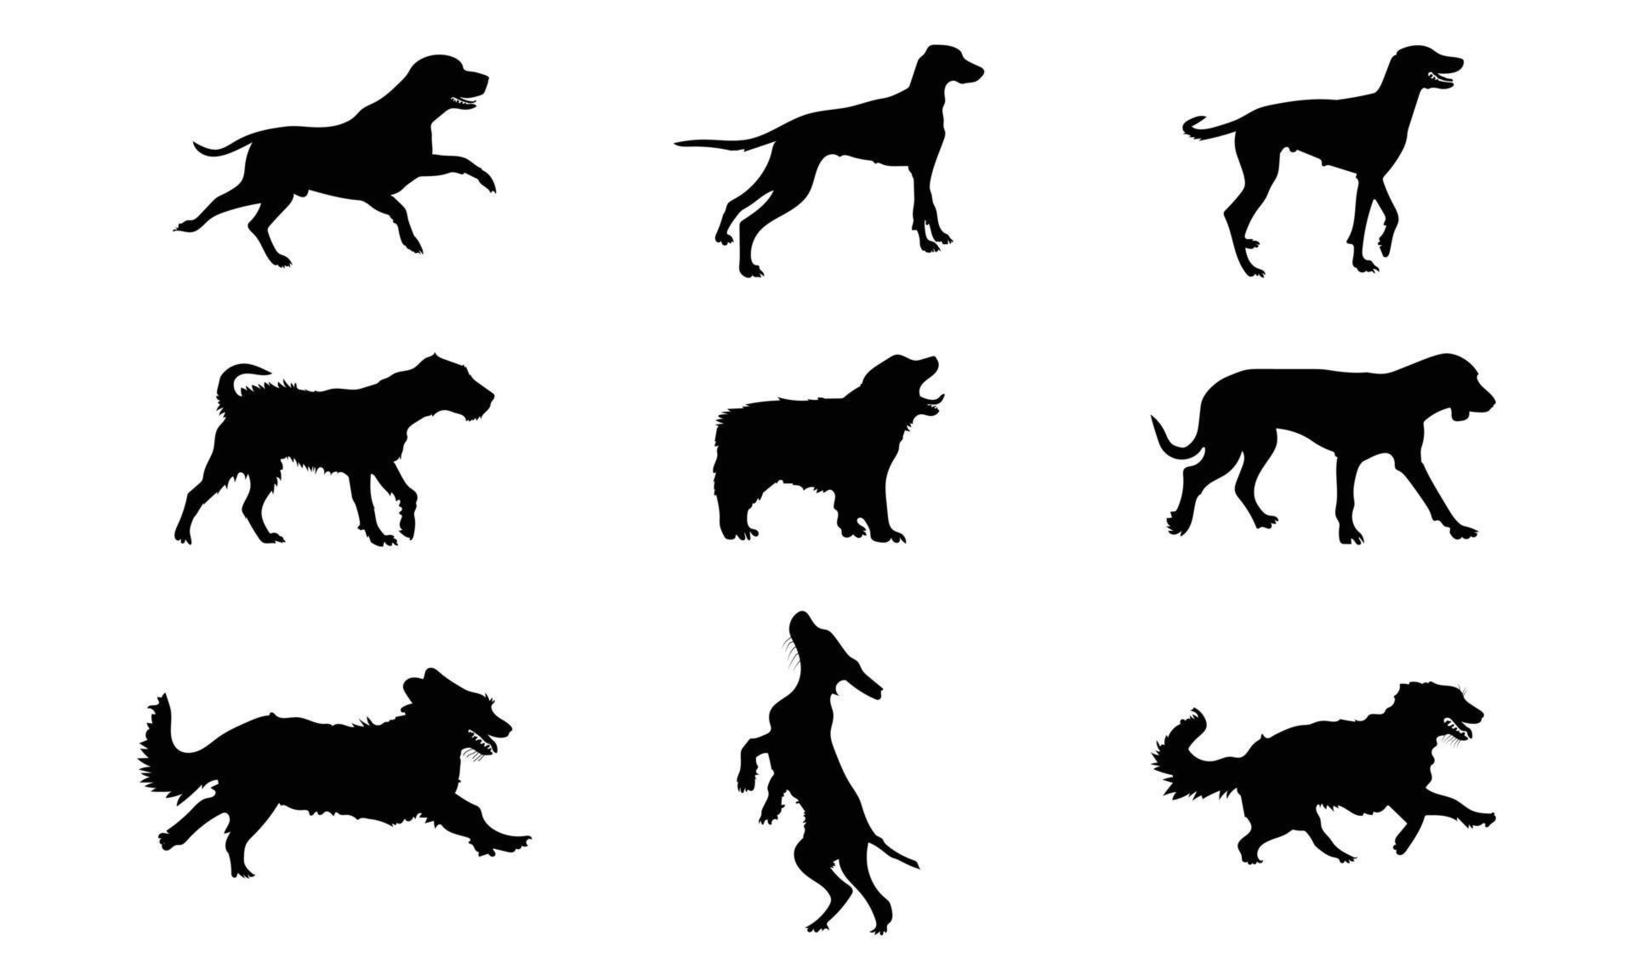 colección de silueta vectorial diferentes razas de perros sobre fondo blanco. vector